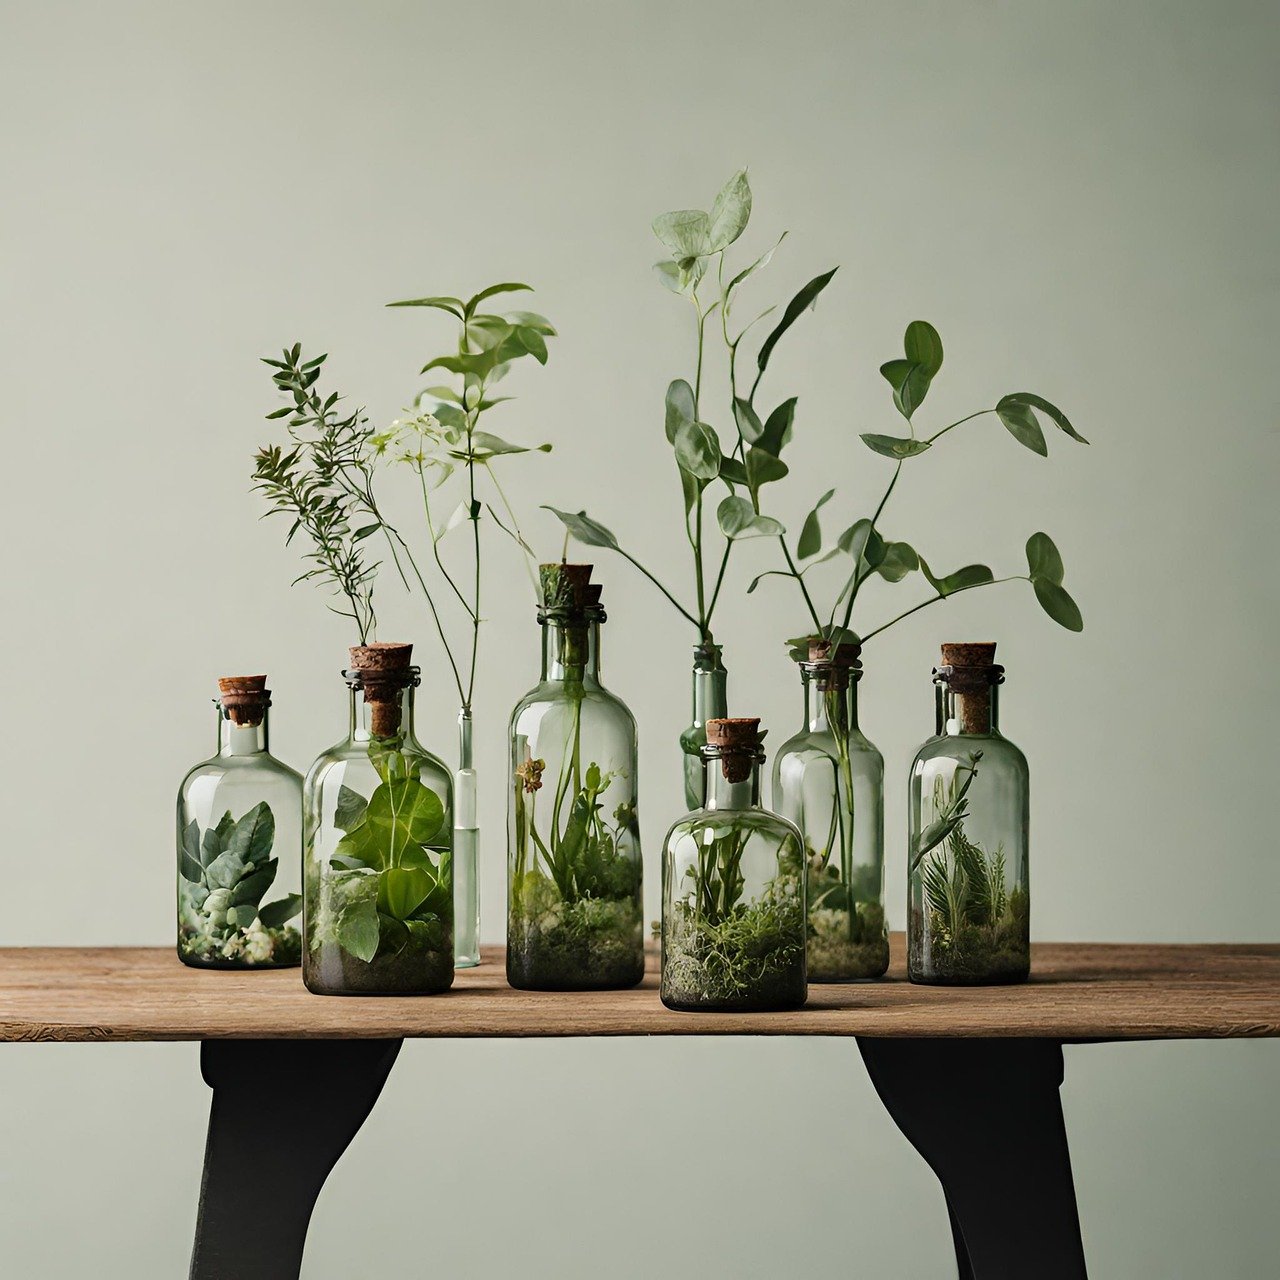 plants, gardening, bottles